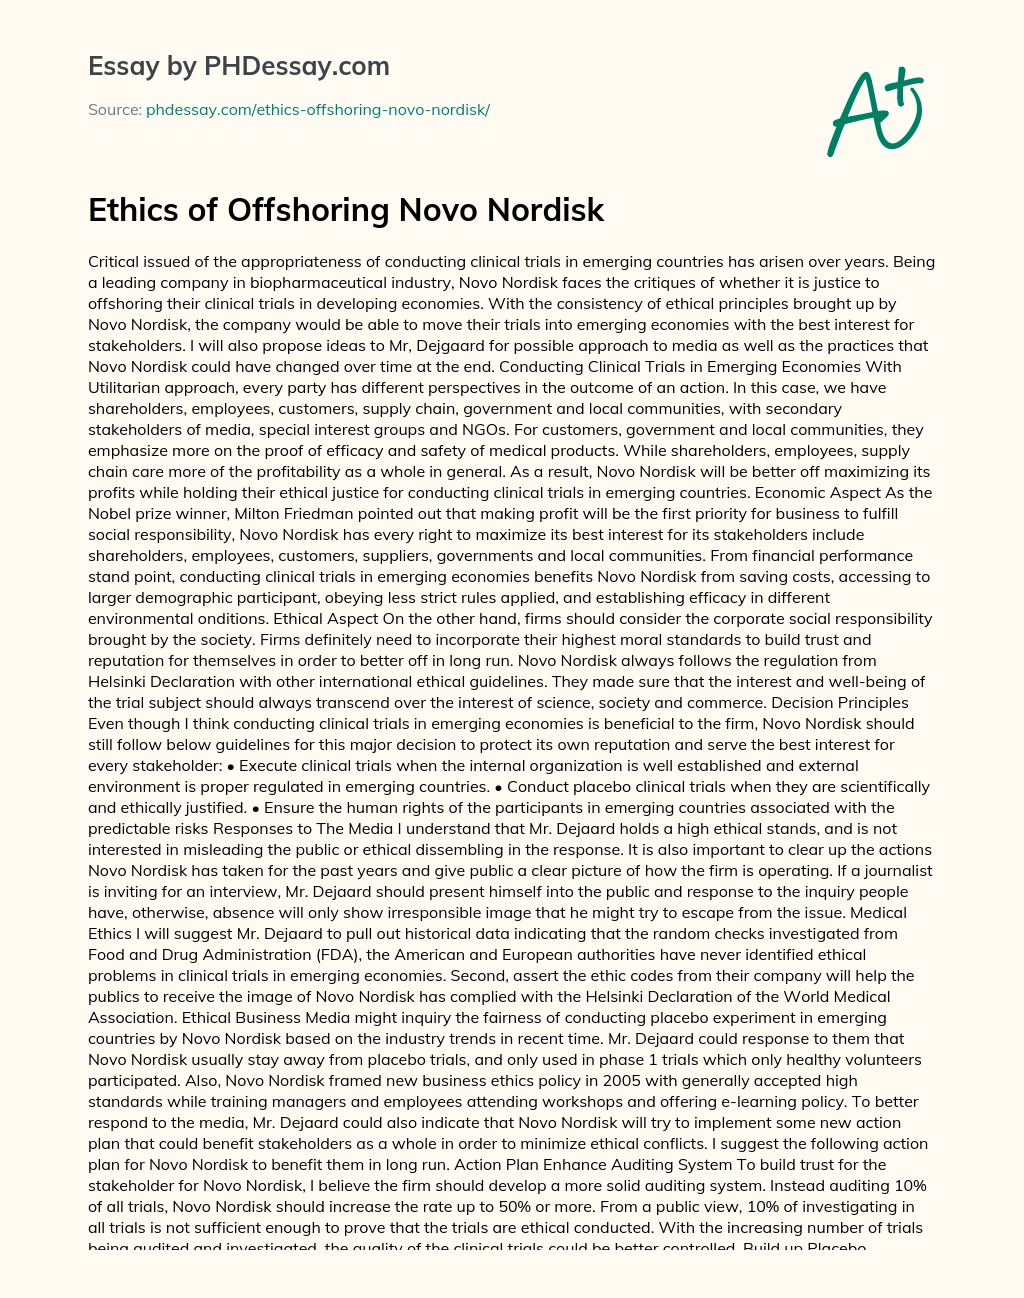 Ethics of Offshoring Novo Nordisk essay